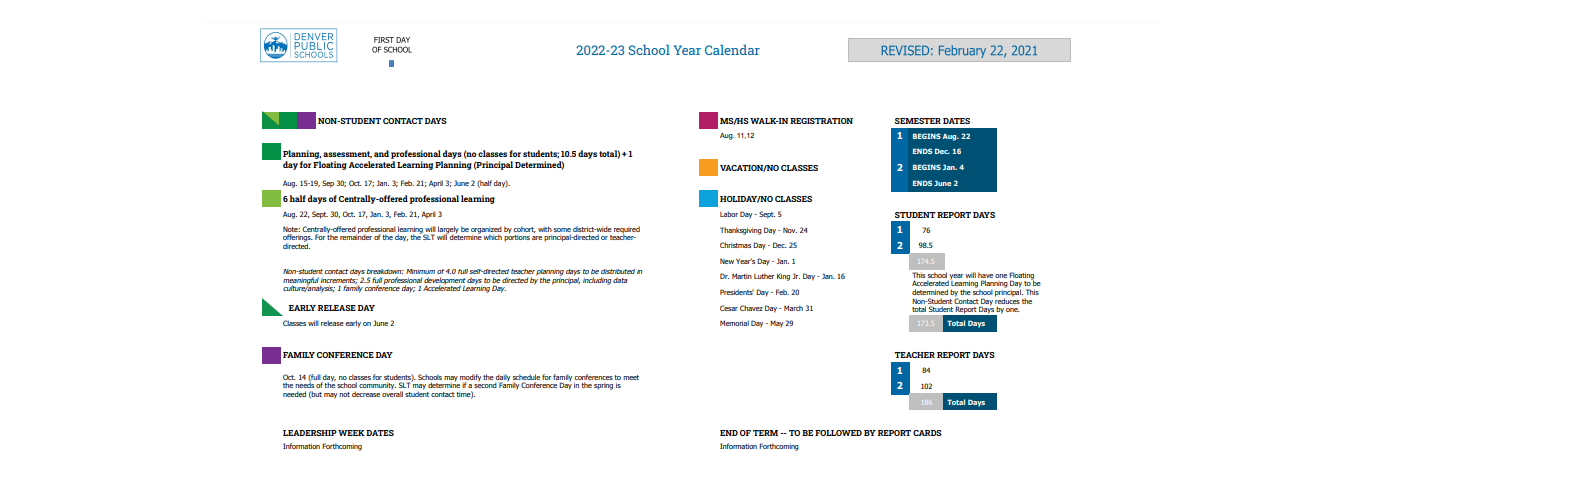 District School Academic Calendar Key for Kepner Middle School